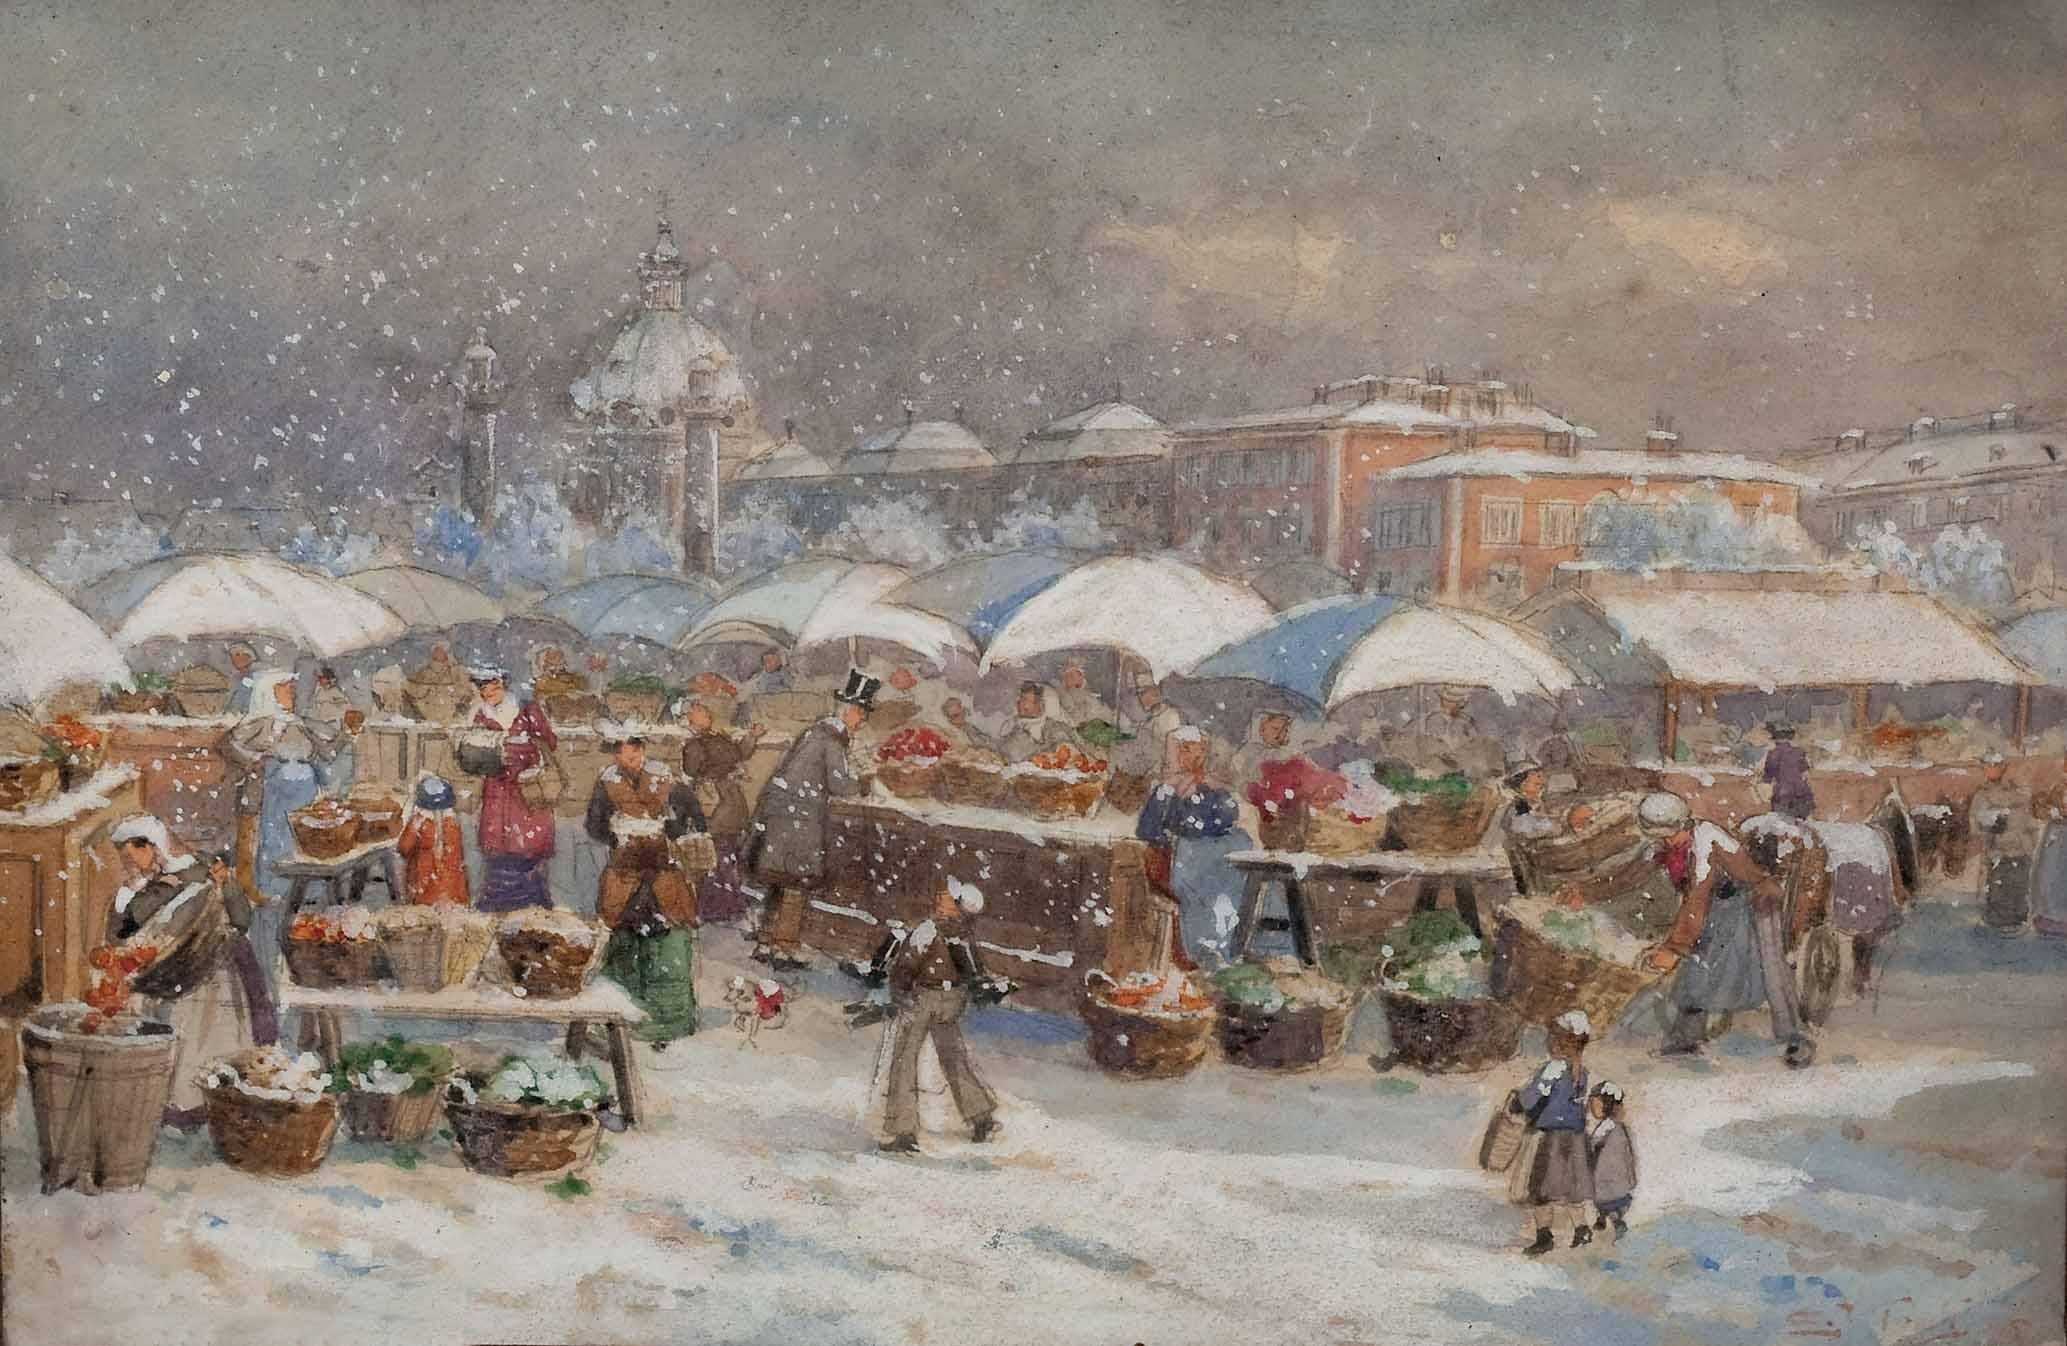 E Kirall. Mercado en Karlsplatz, Viena, en invierno - 1925